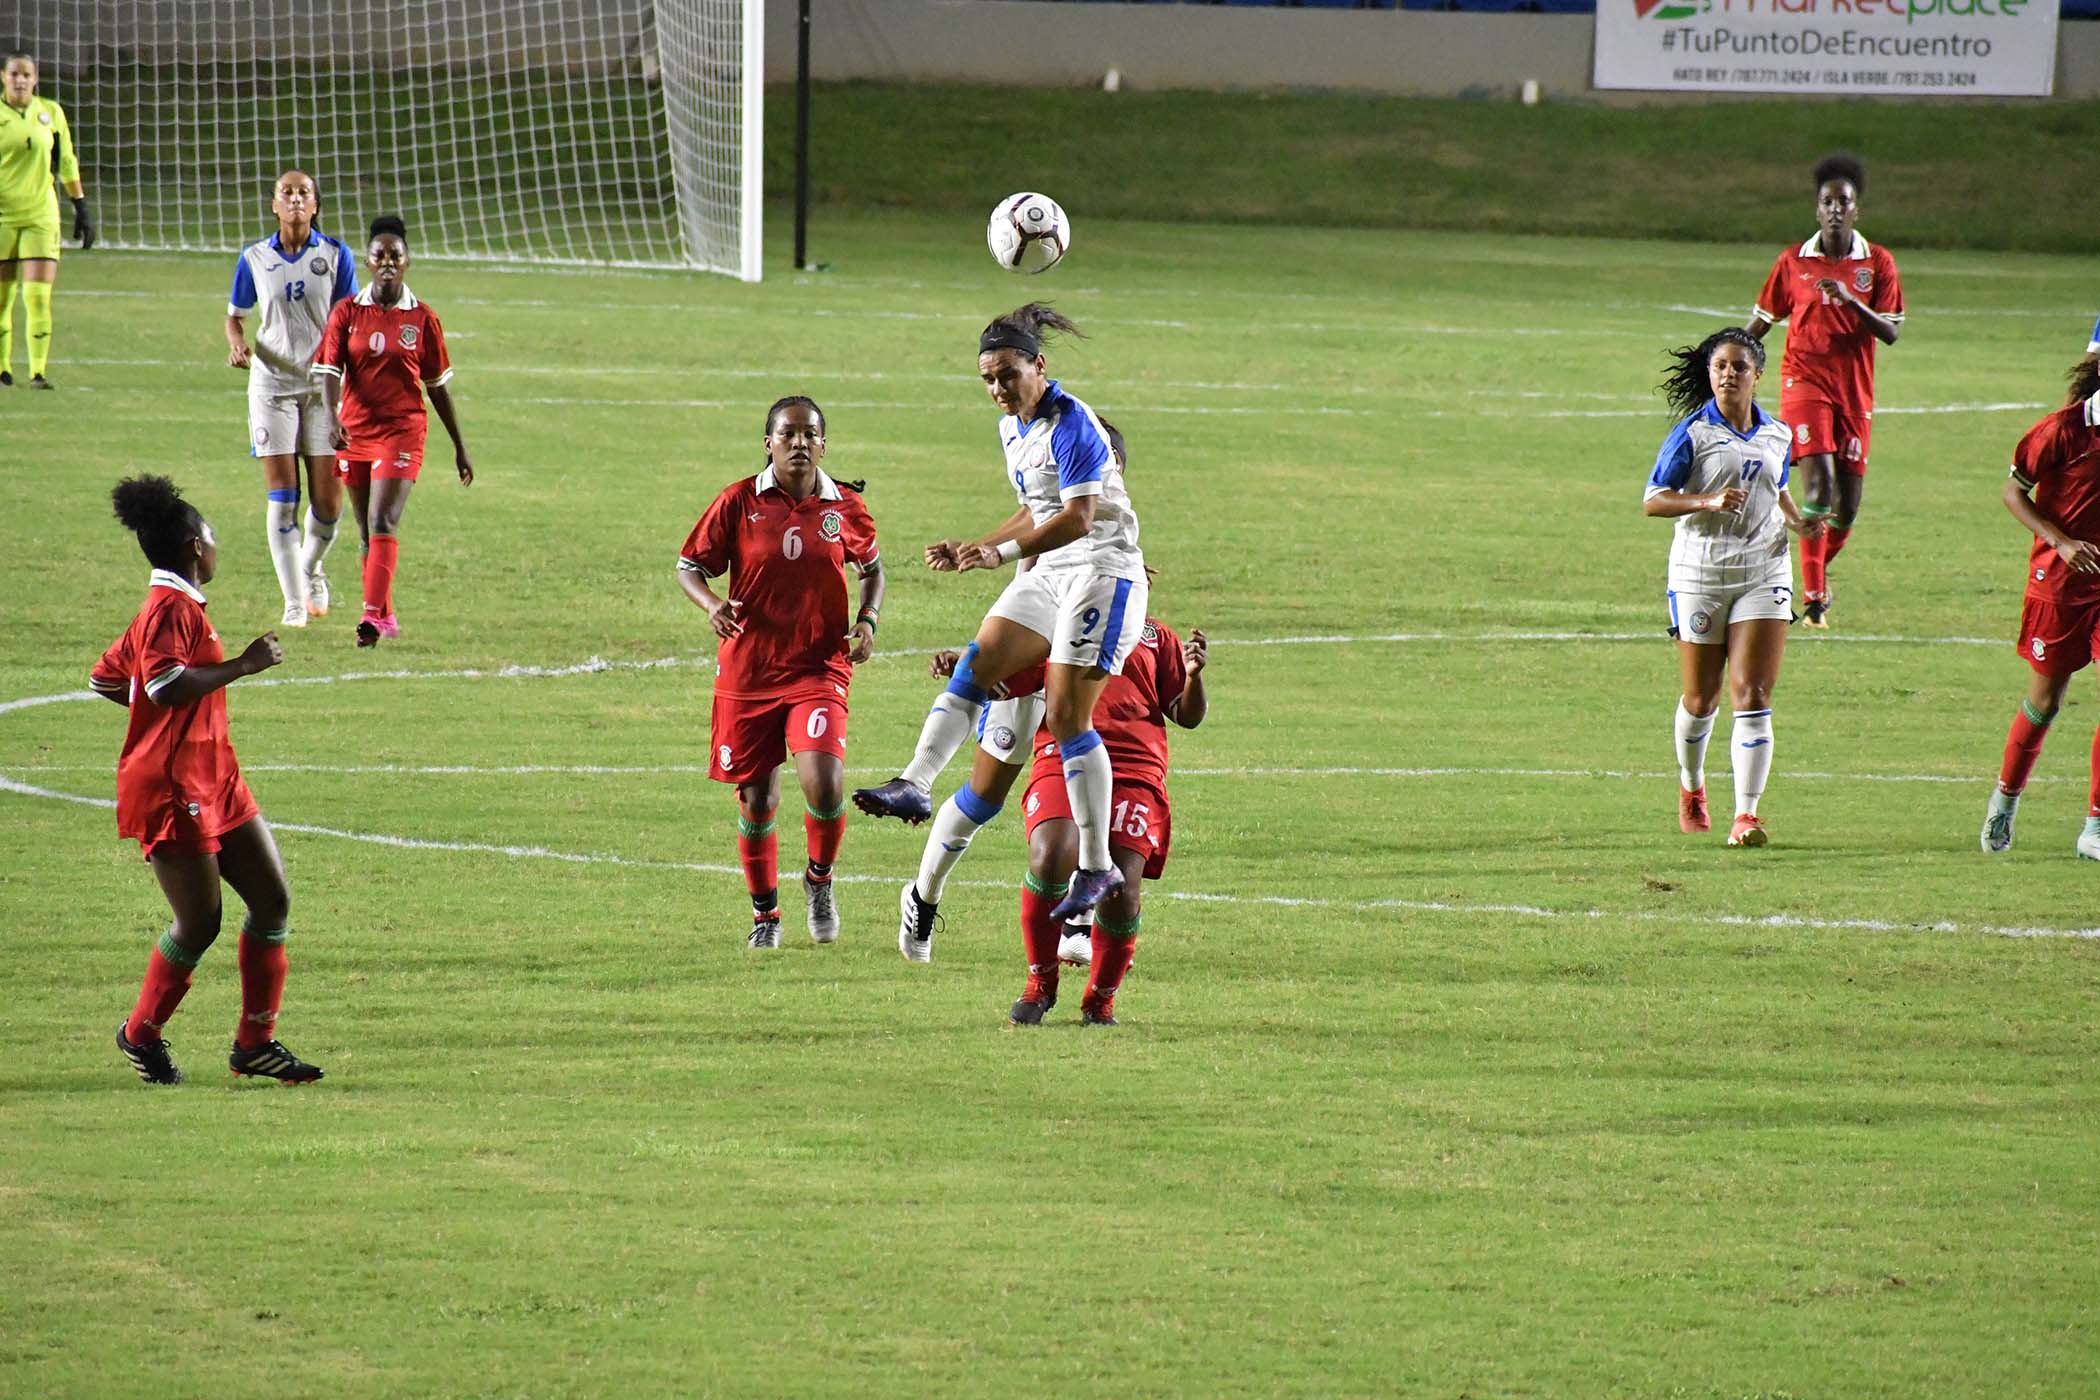 Soccer-Fem-PR-vs-Surinam-26